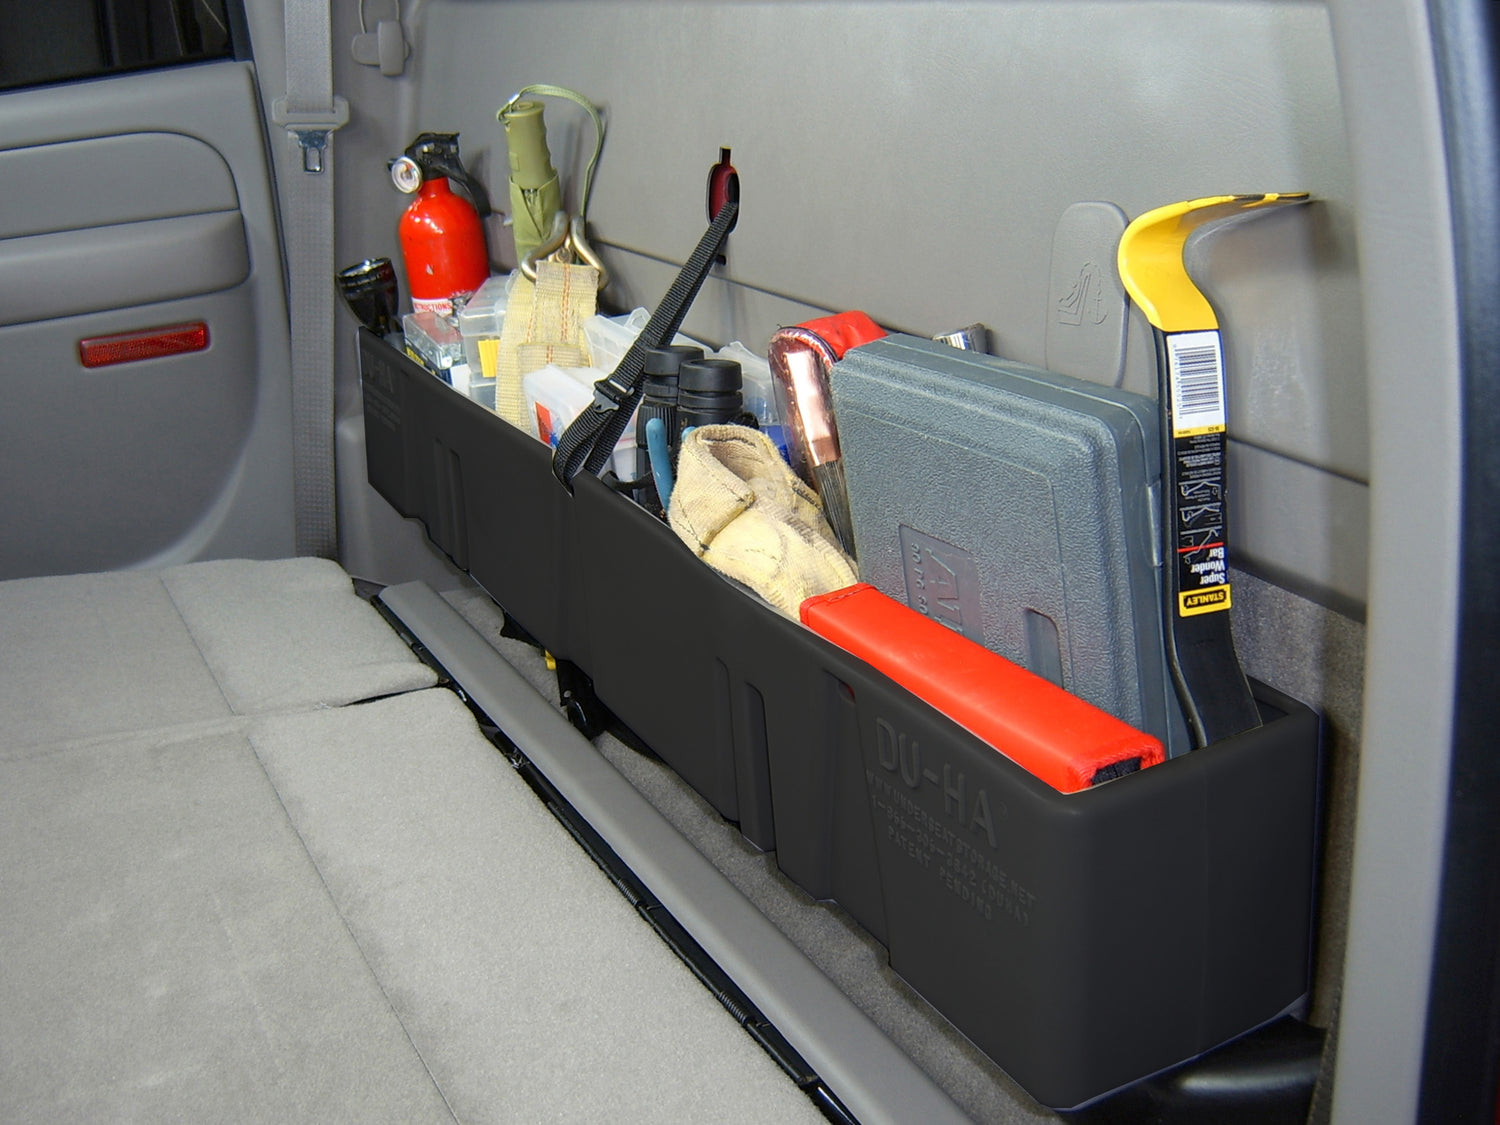 DÜHA Under Seat Storage Unit fits 04-07 Chevy Silverado/GMC Sierra 1500 Light Duty Crew Cab - Heavy-Duty Back Seat Organizer